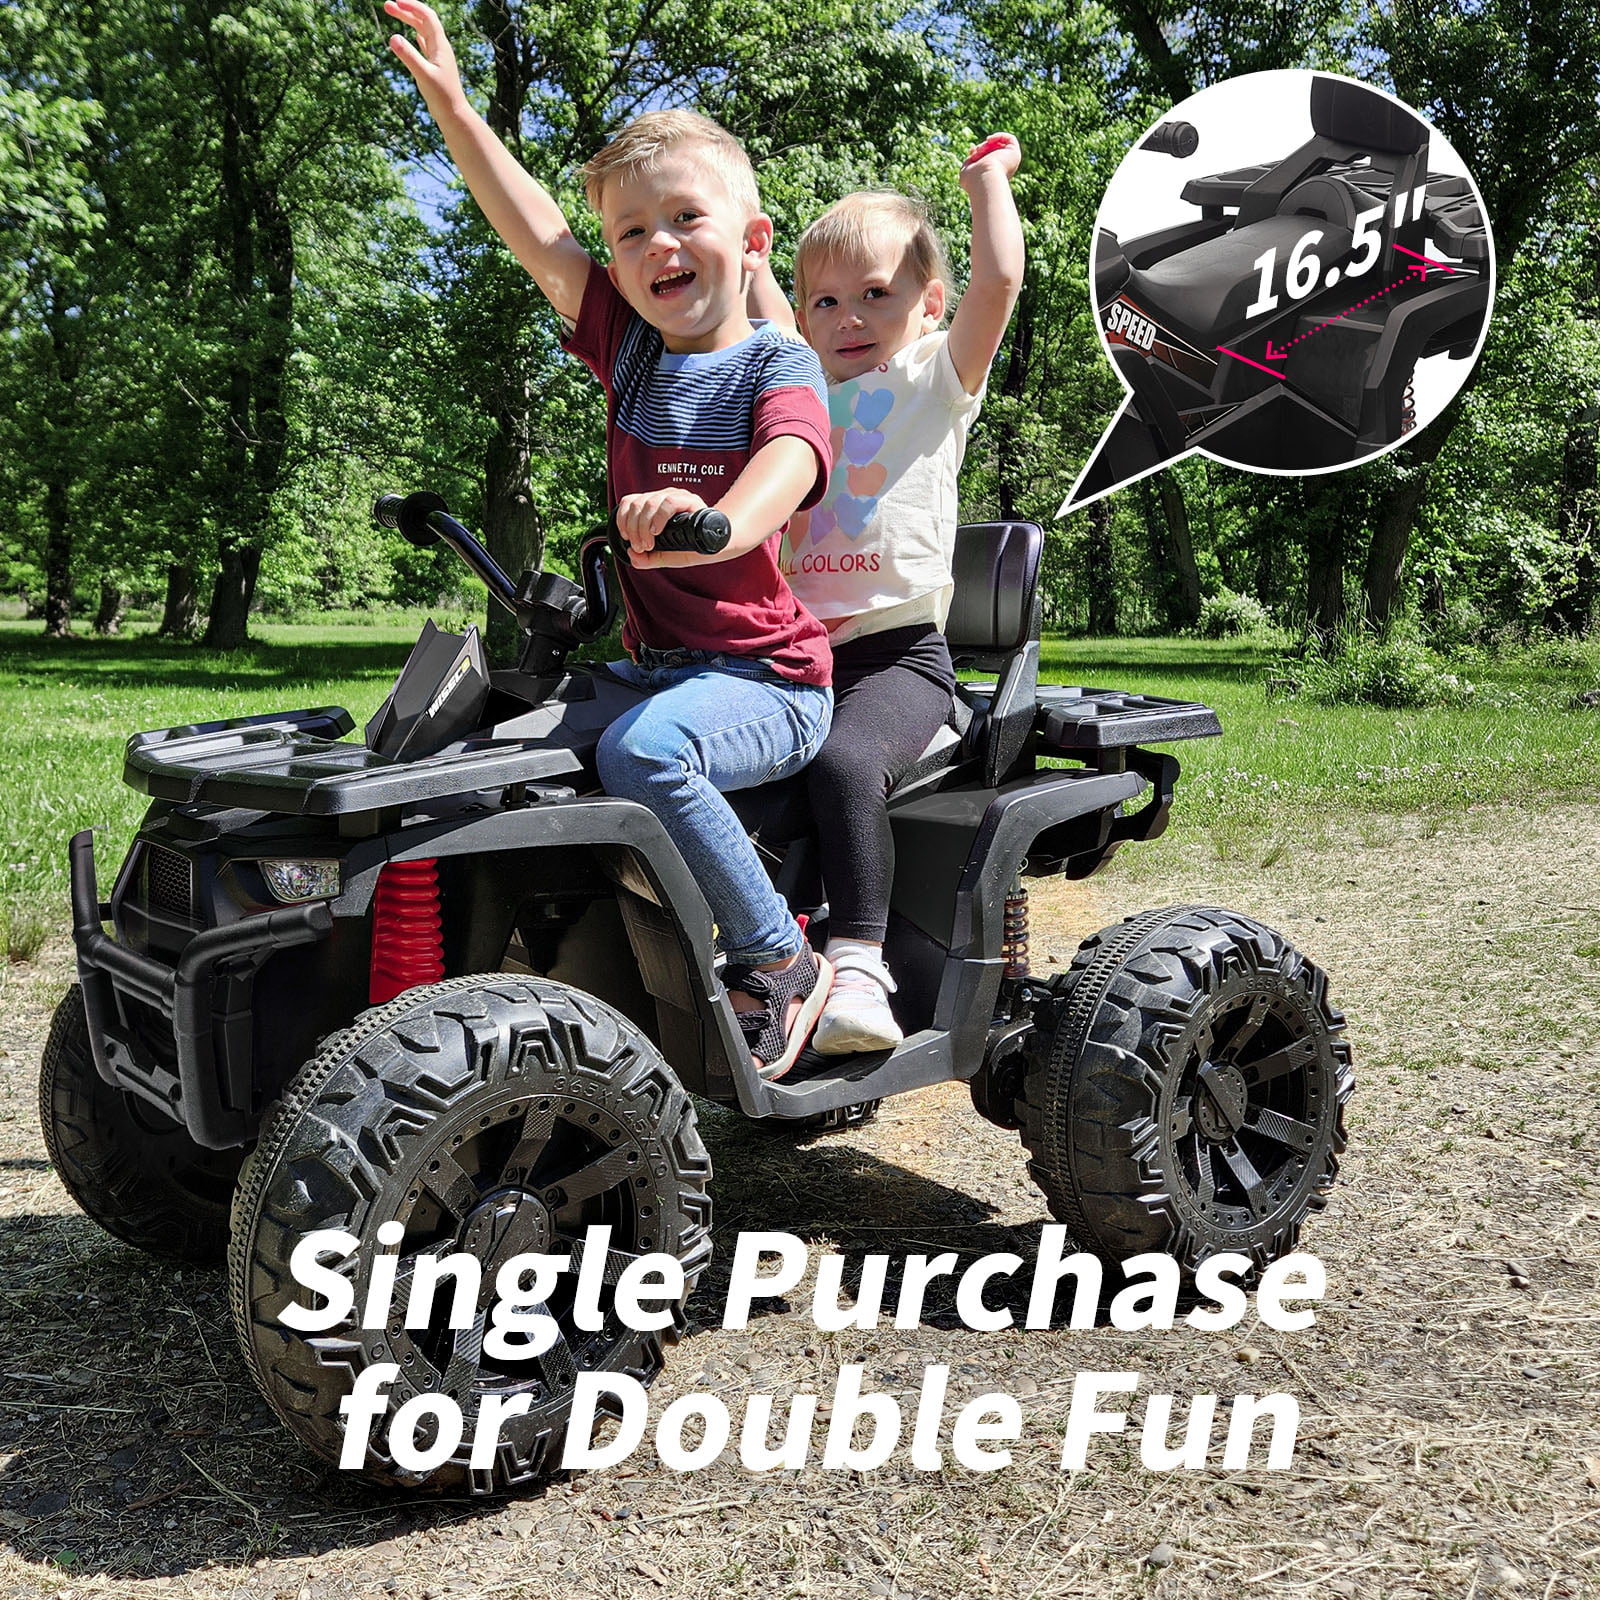 Hikiddo JC333 24V Ride on Toy, Kids ATV 4-Wheeler with 400W Motor, 2 Seater - Black - image 4 of 9